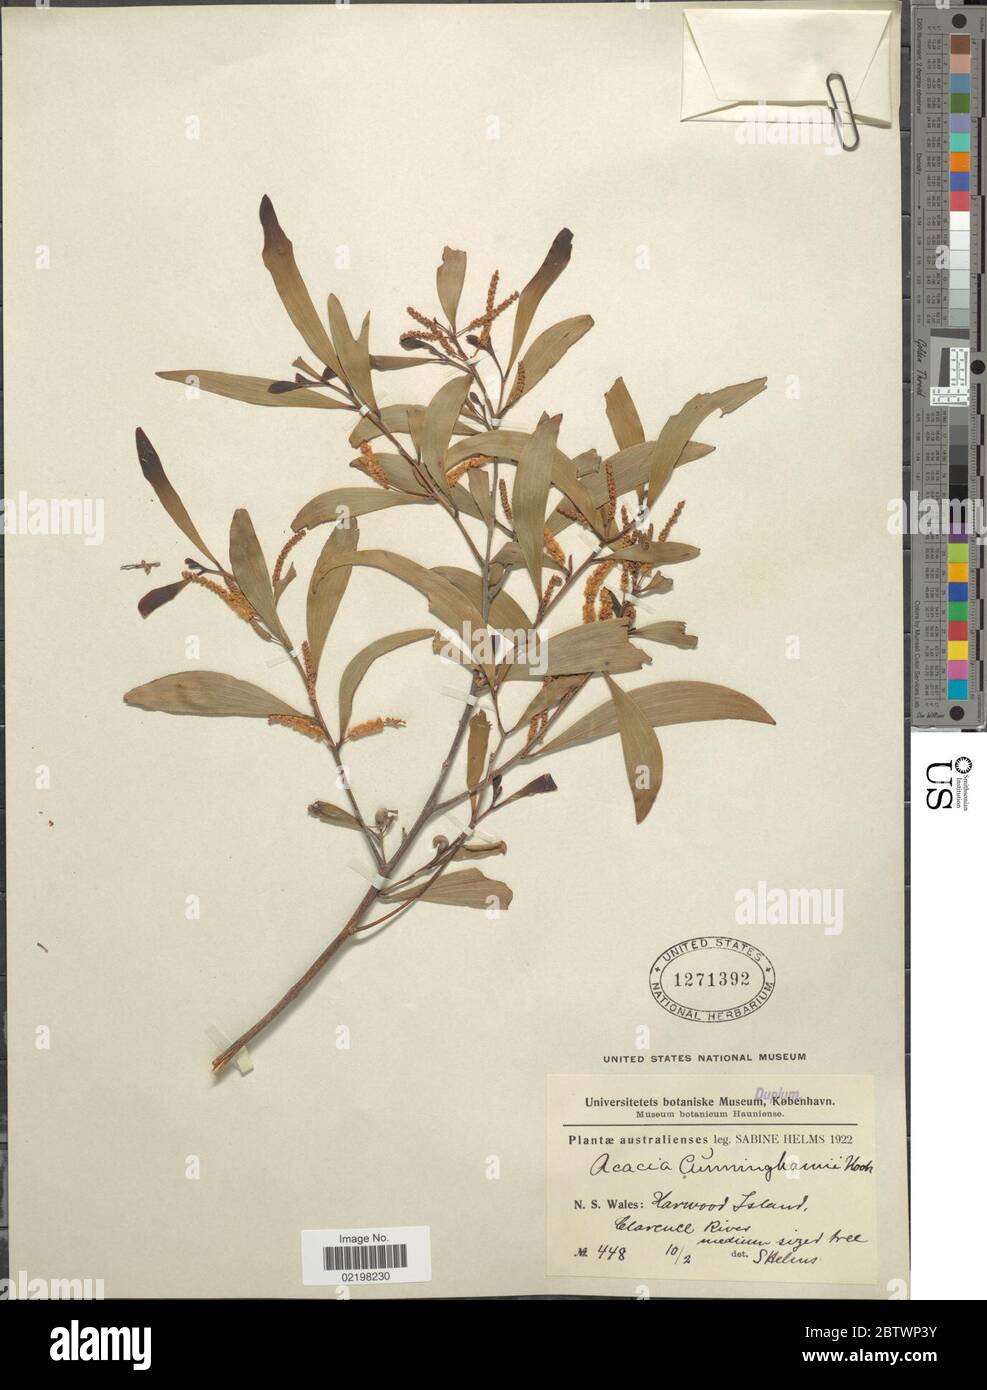 Acacia cunnighamii Hook. Stock Photo